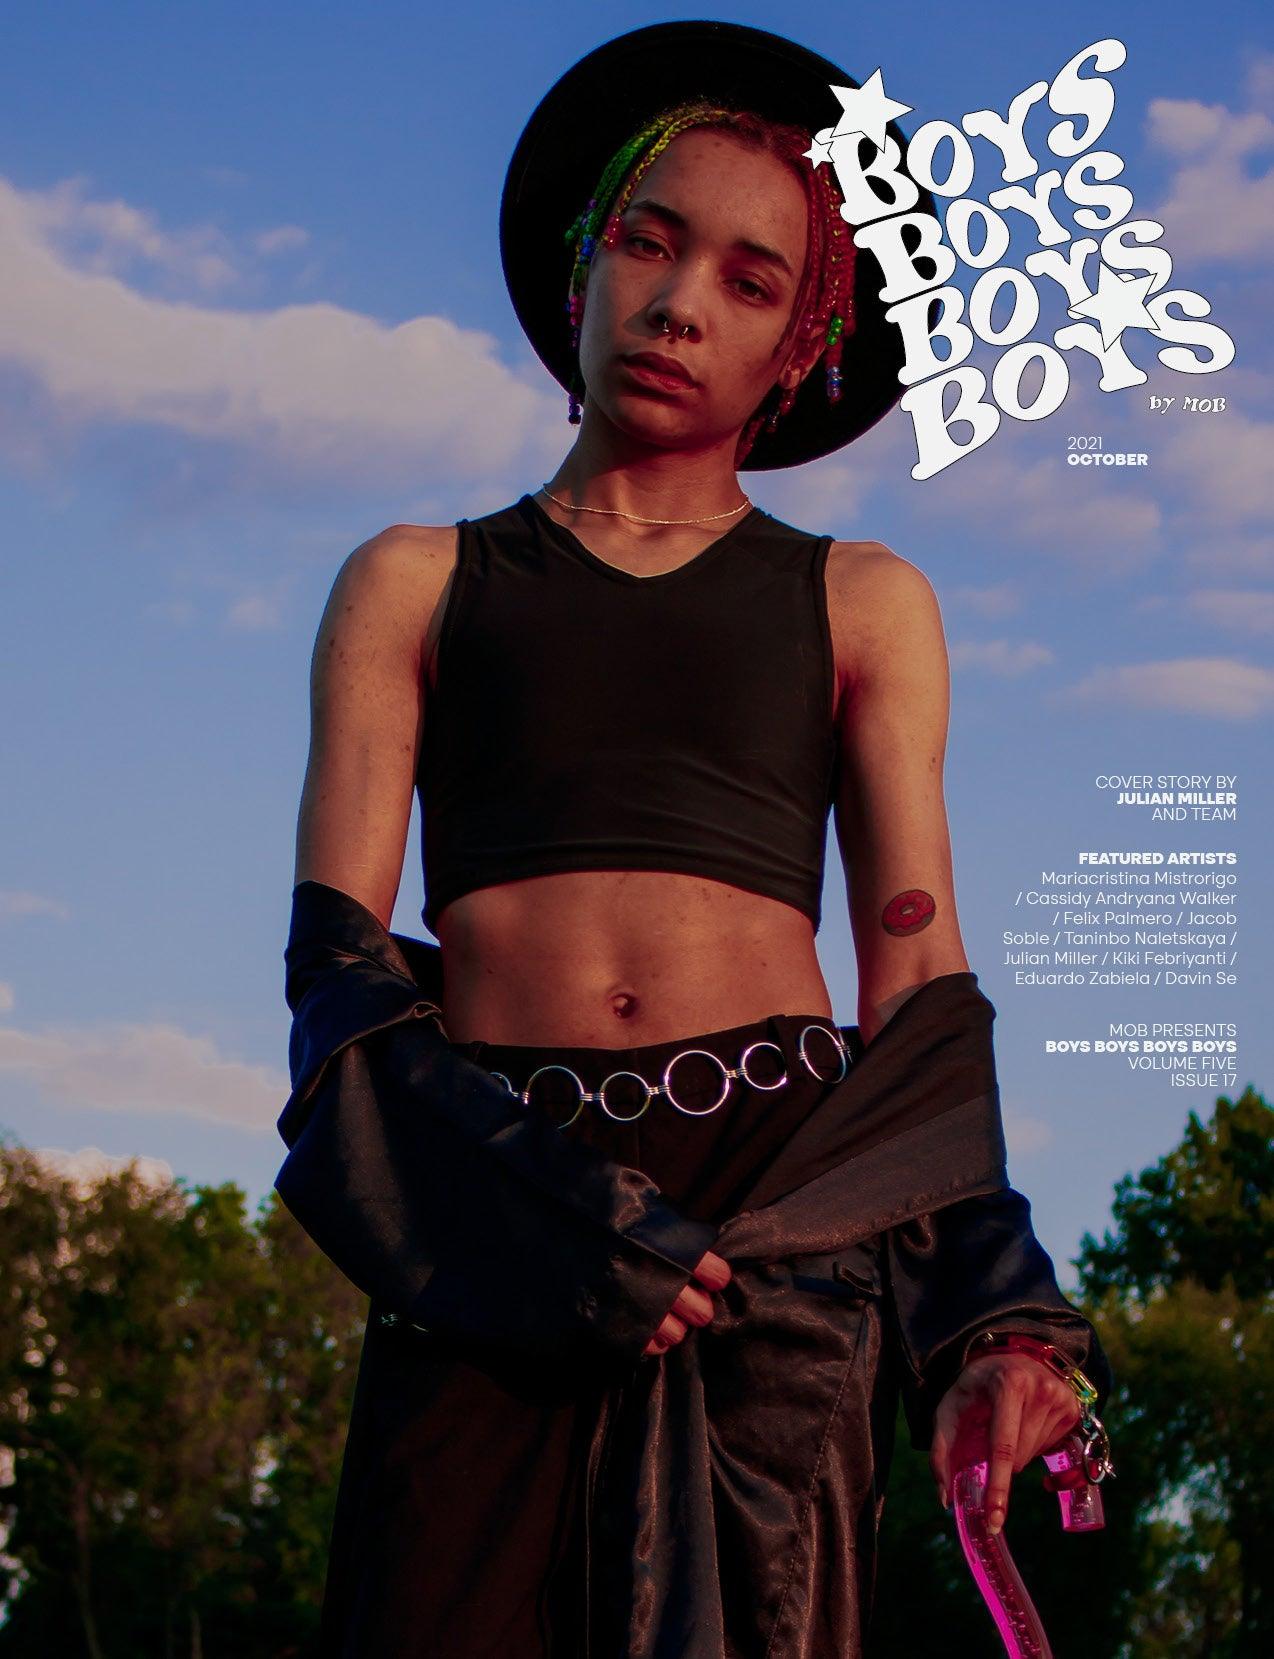 BOYS BOYS BOYS BOYS | VOLUME FIVE | ISSUE #17 - Mob Journal